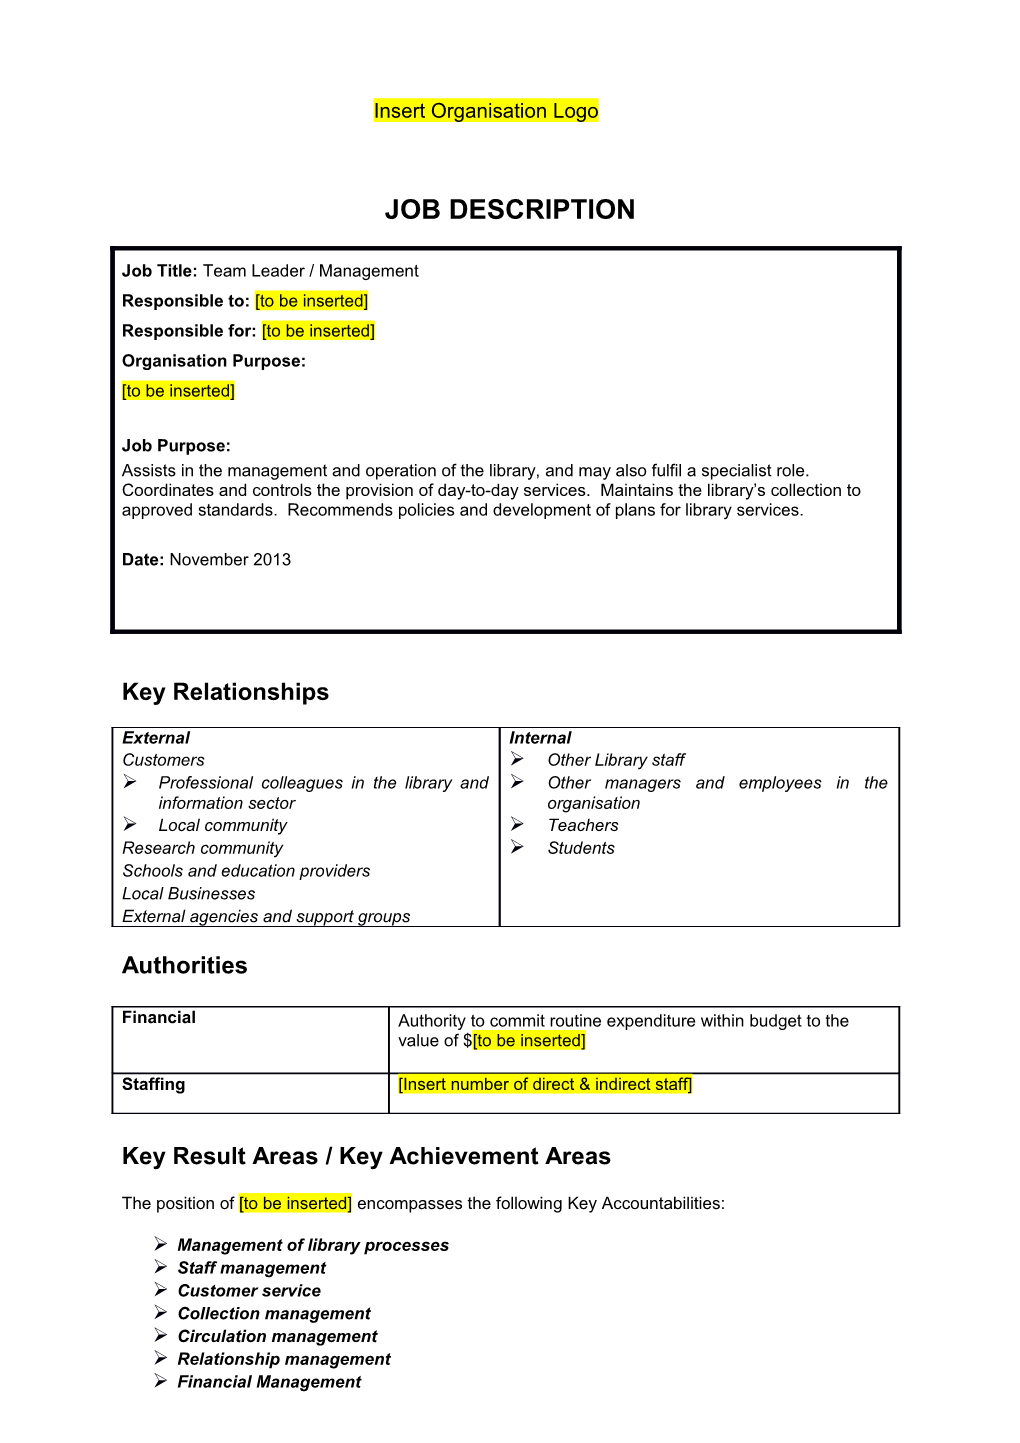 Key Result Areas / Key Achievement Areas